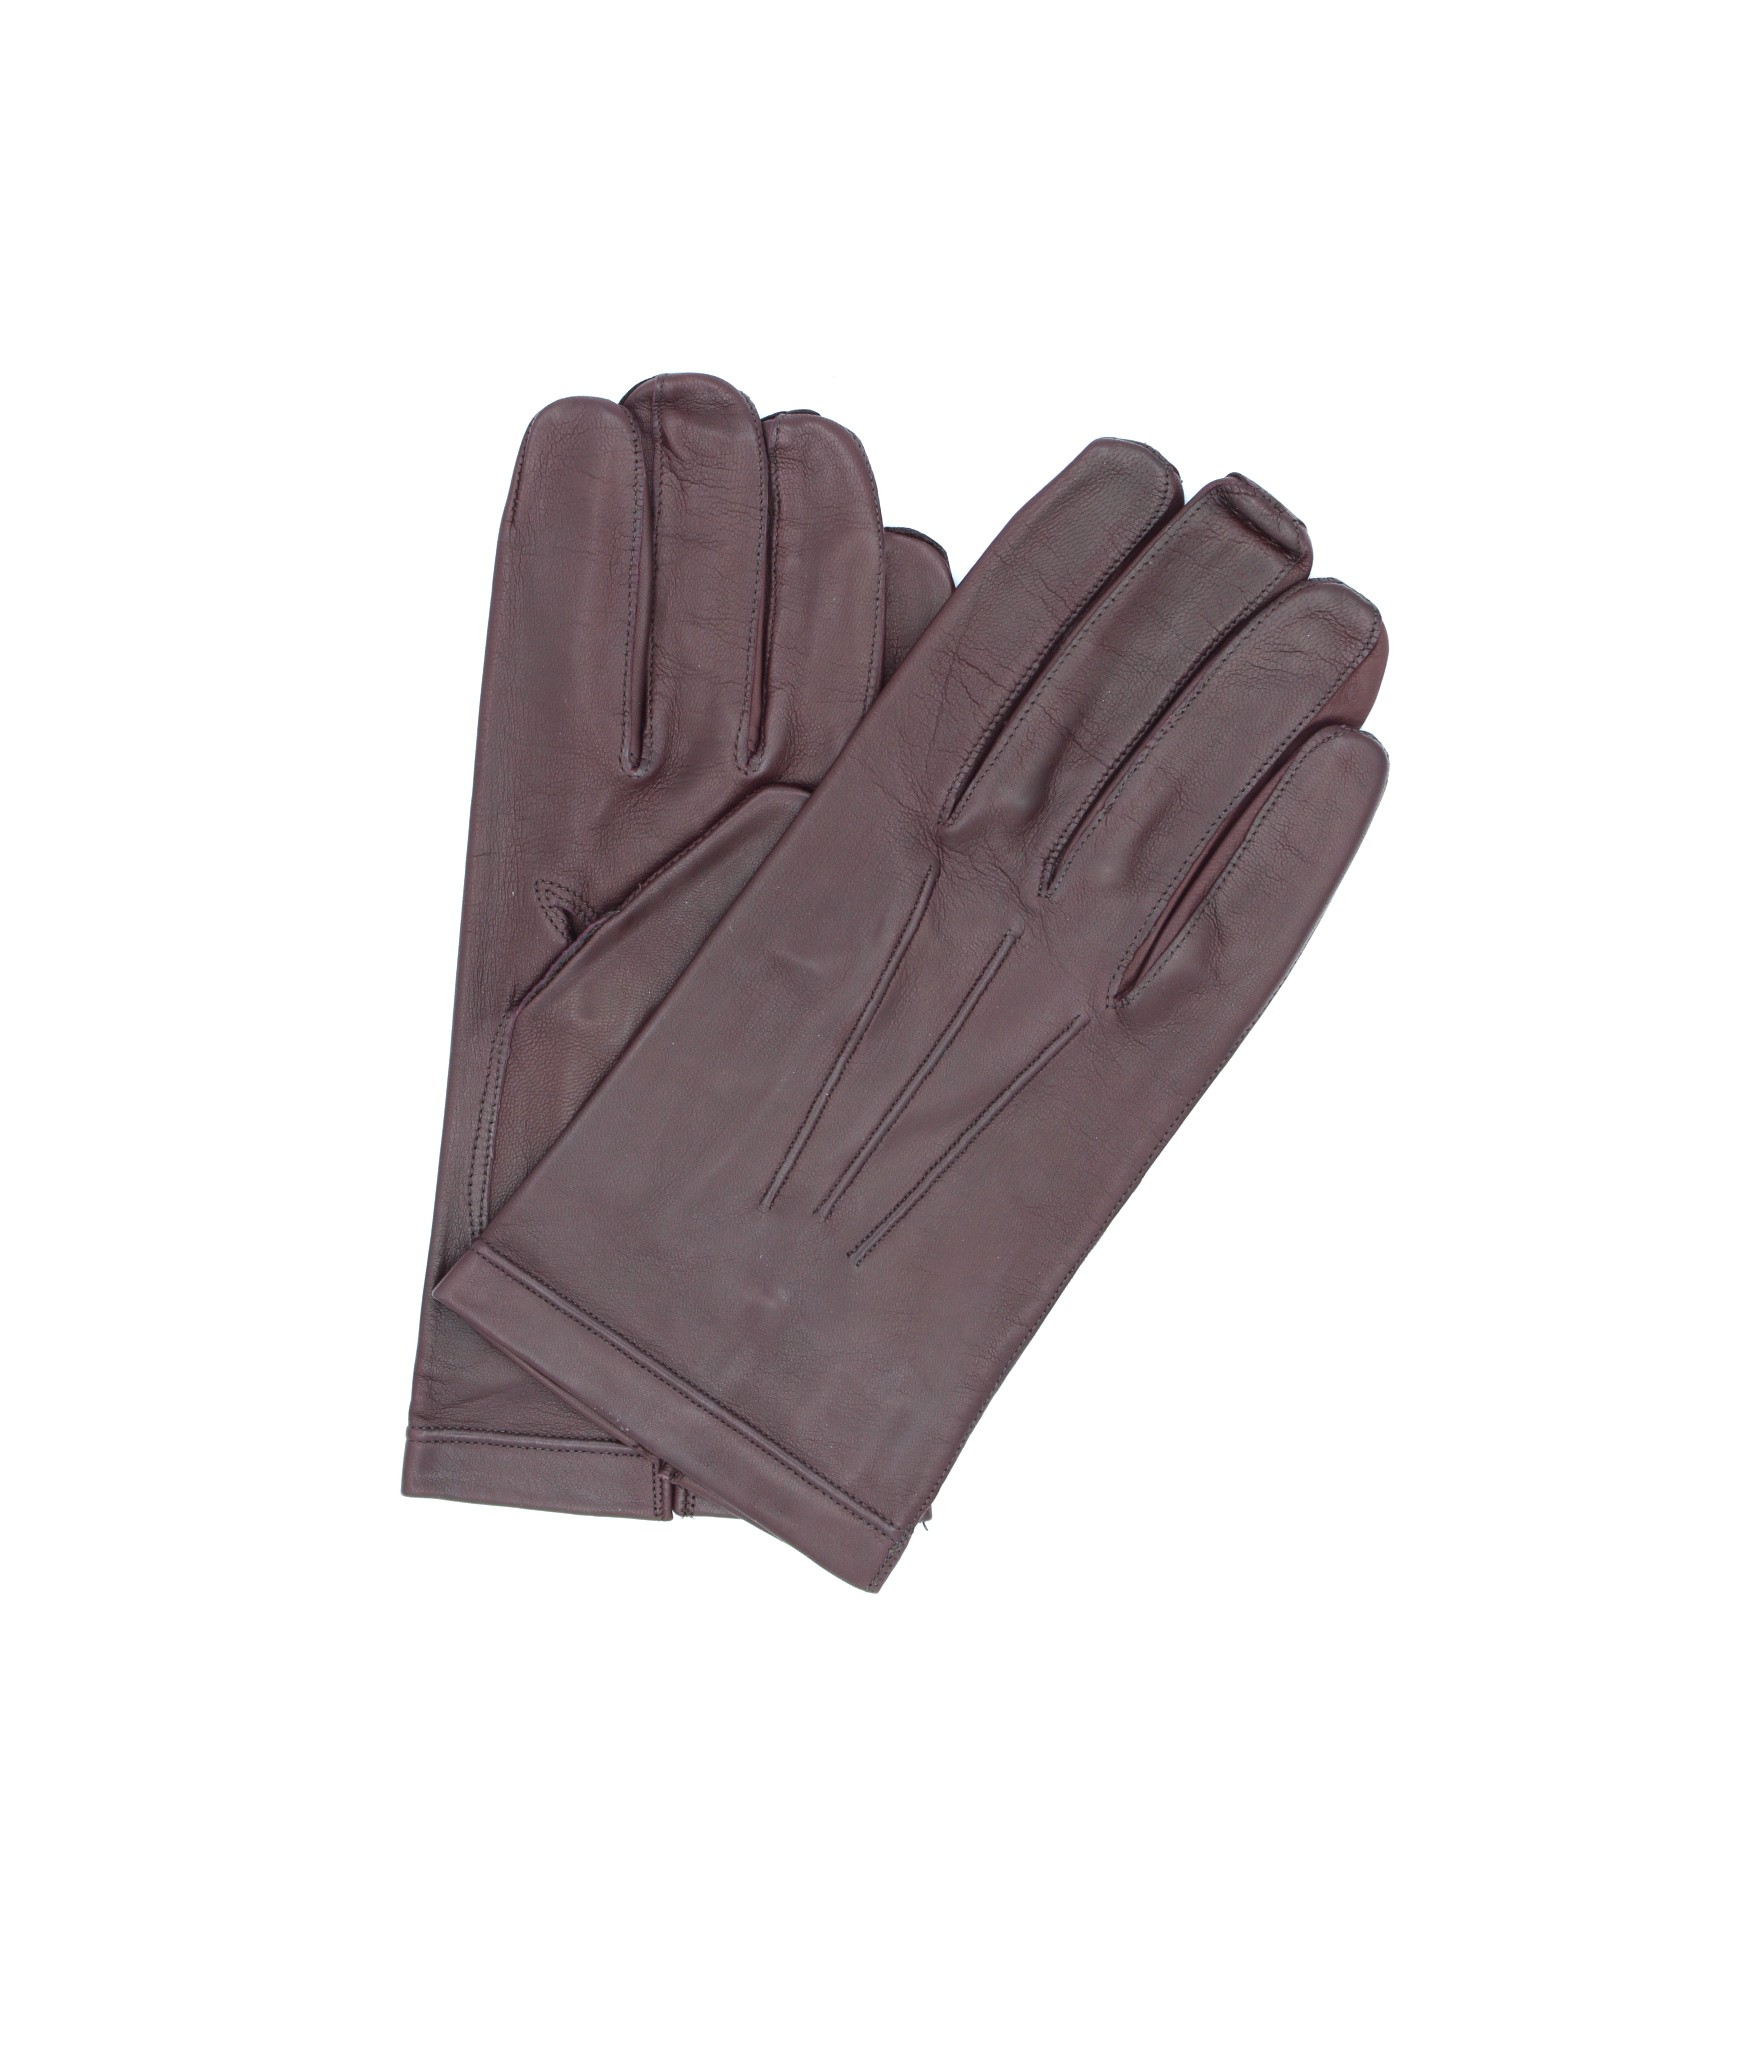 Uomo Classic Nappa leather gloves Silk lined Bordeaux Sermoneta